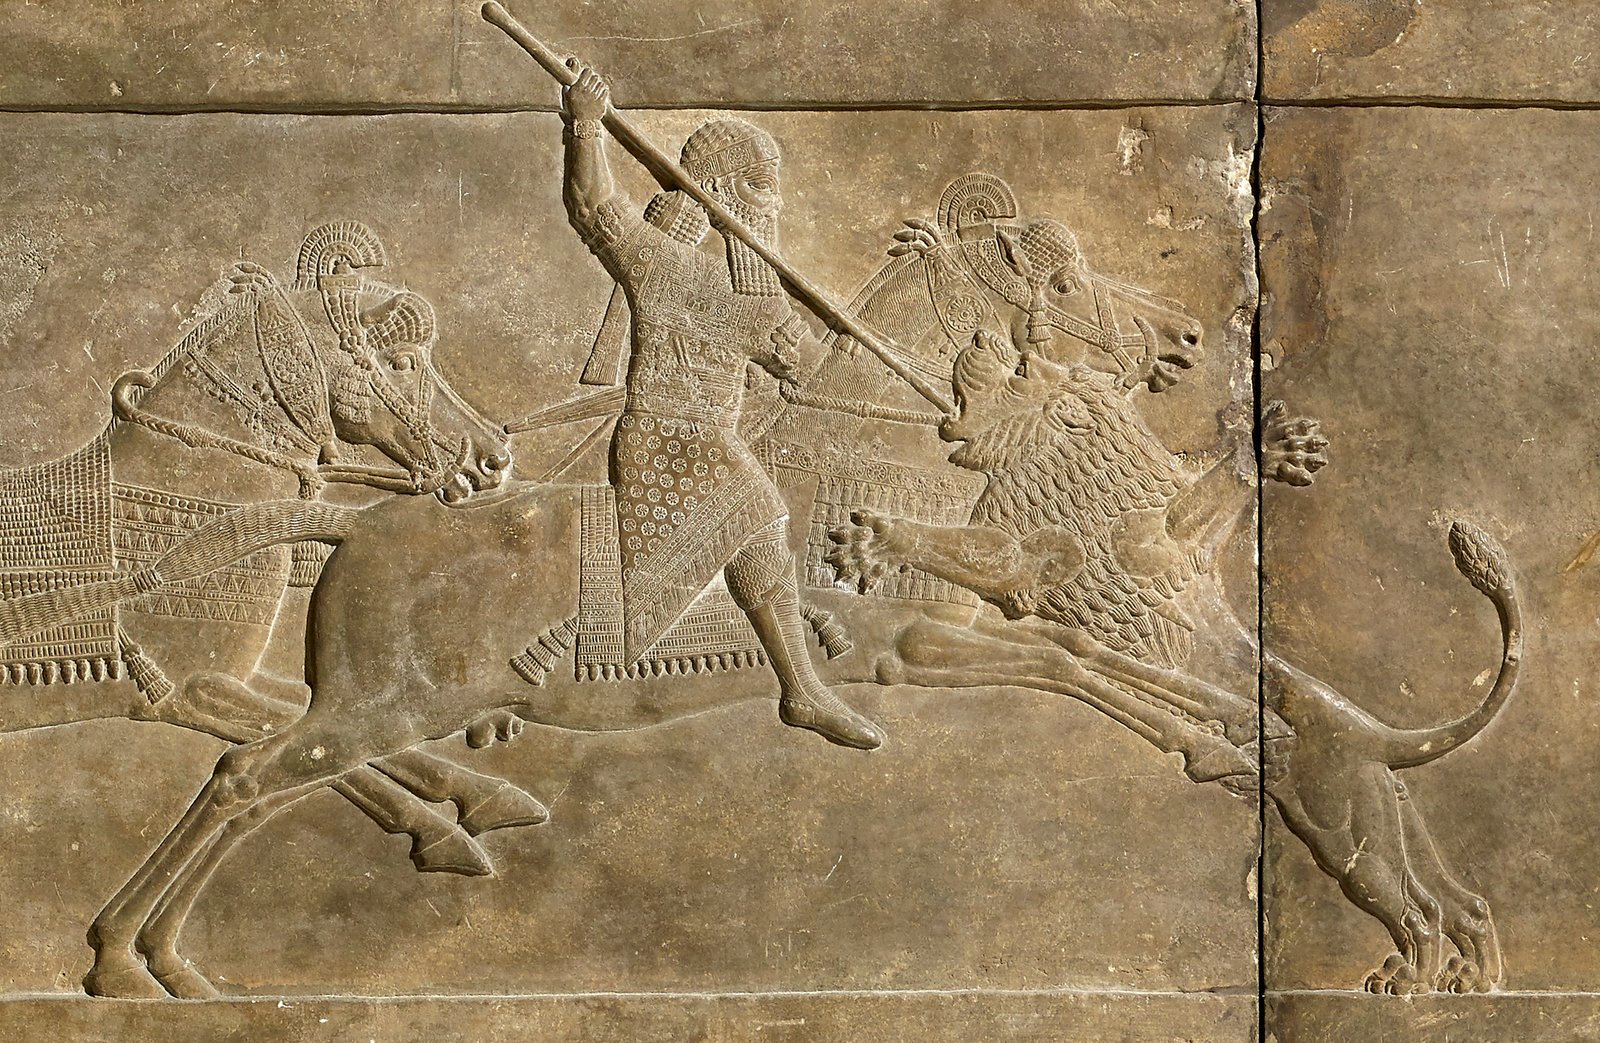 Rey Asurbanipal